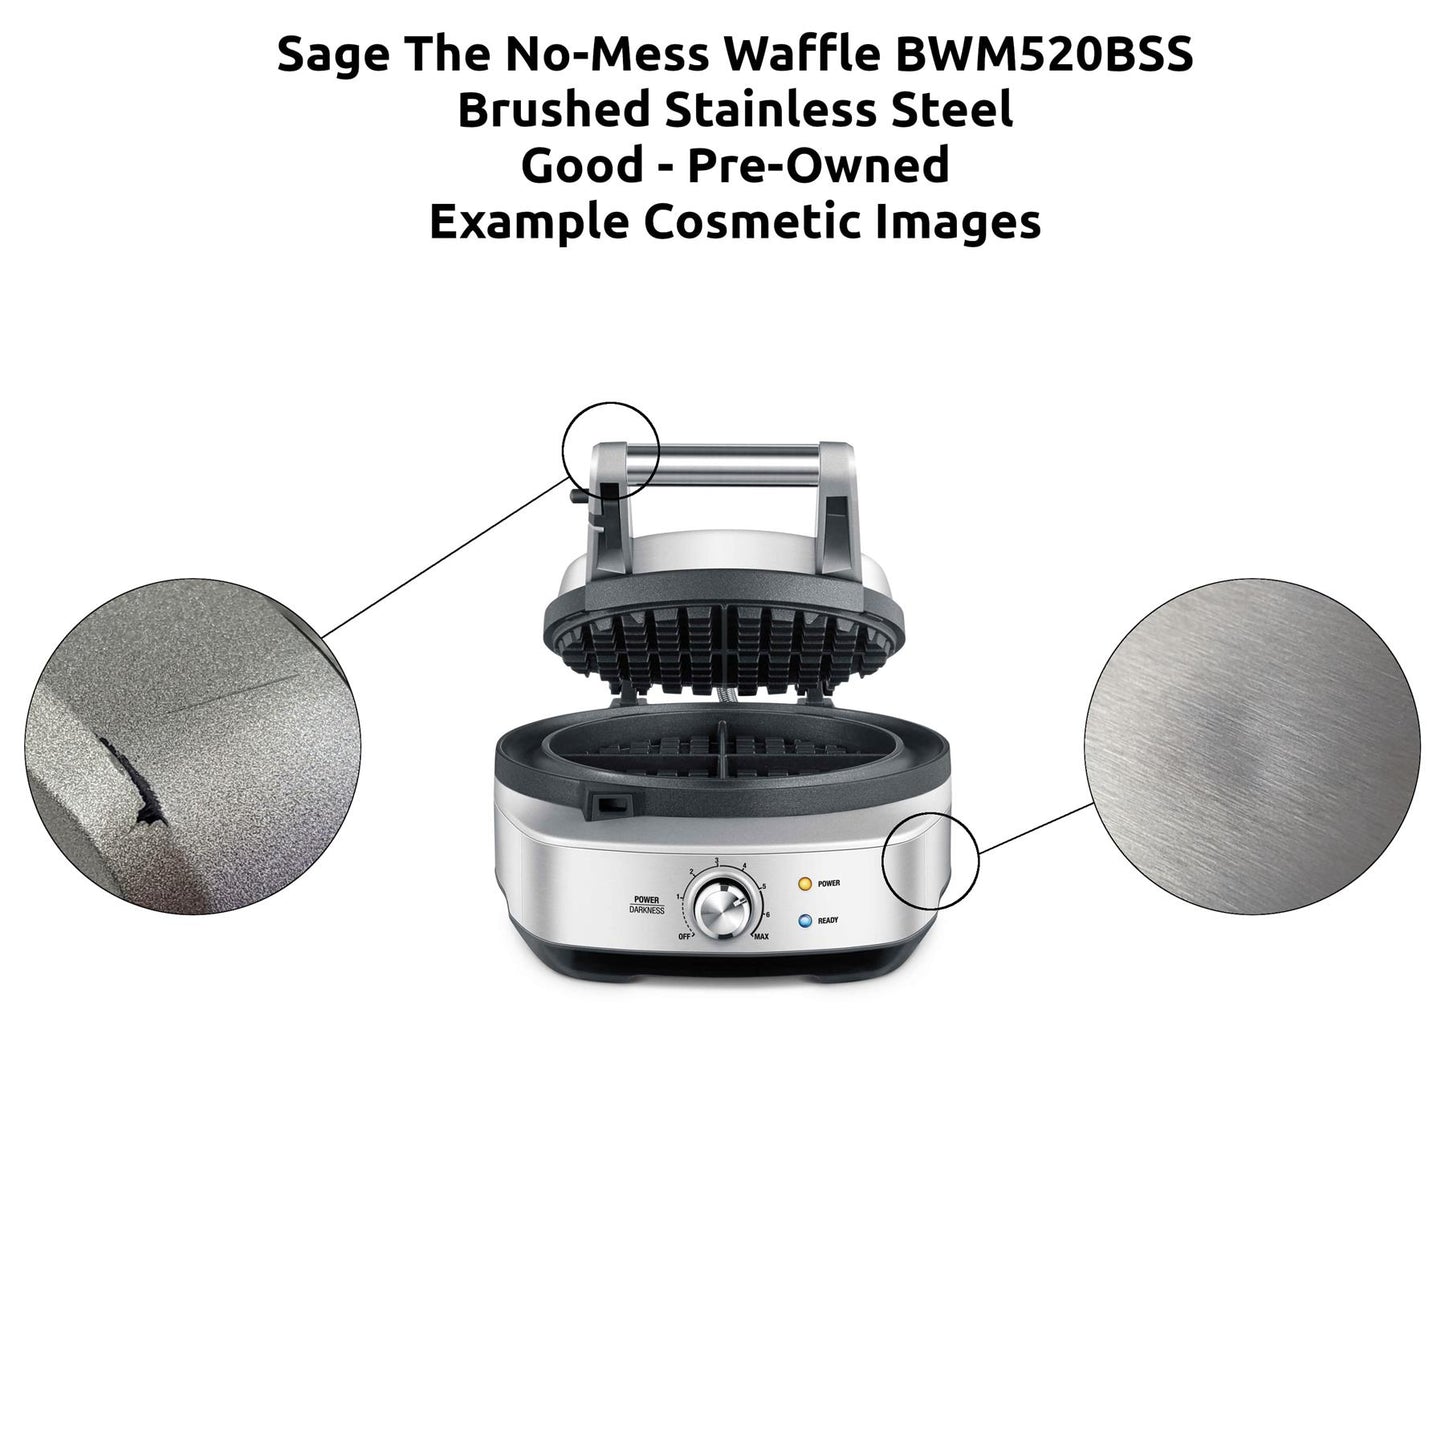 Sage The No-Mess Waffle BWM520 Waffle Maker